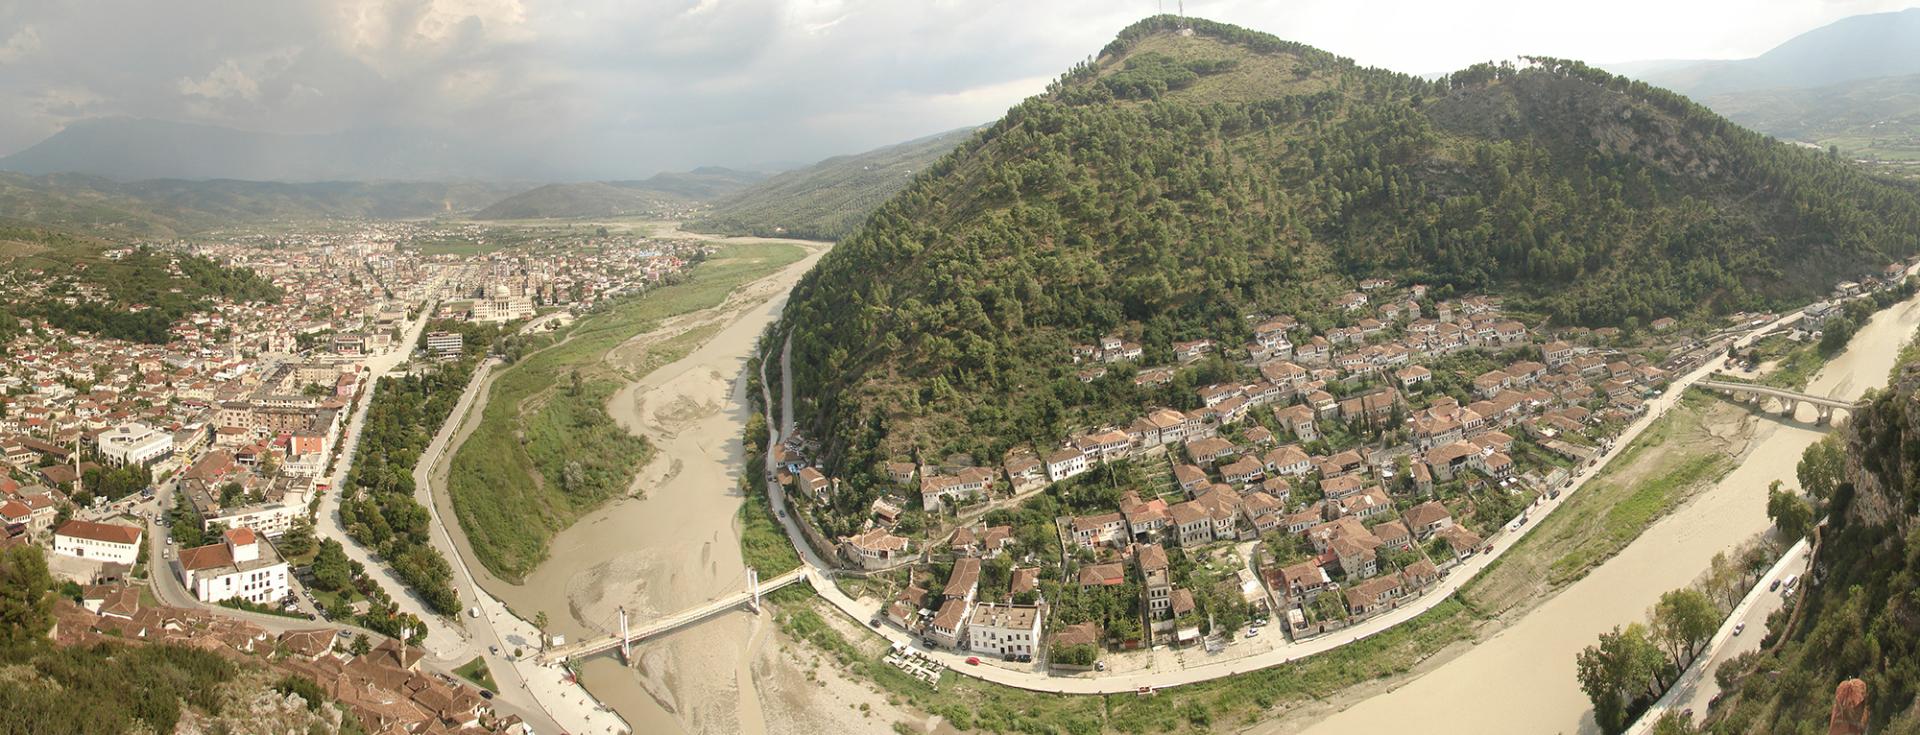 Berat City of a Thousand Windows in Albania